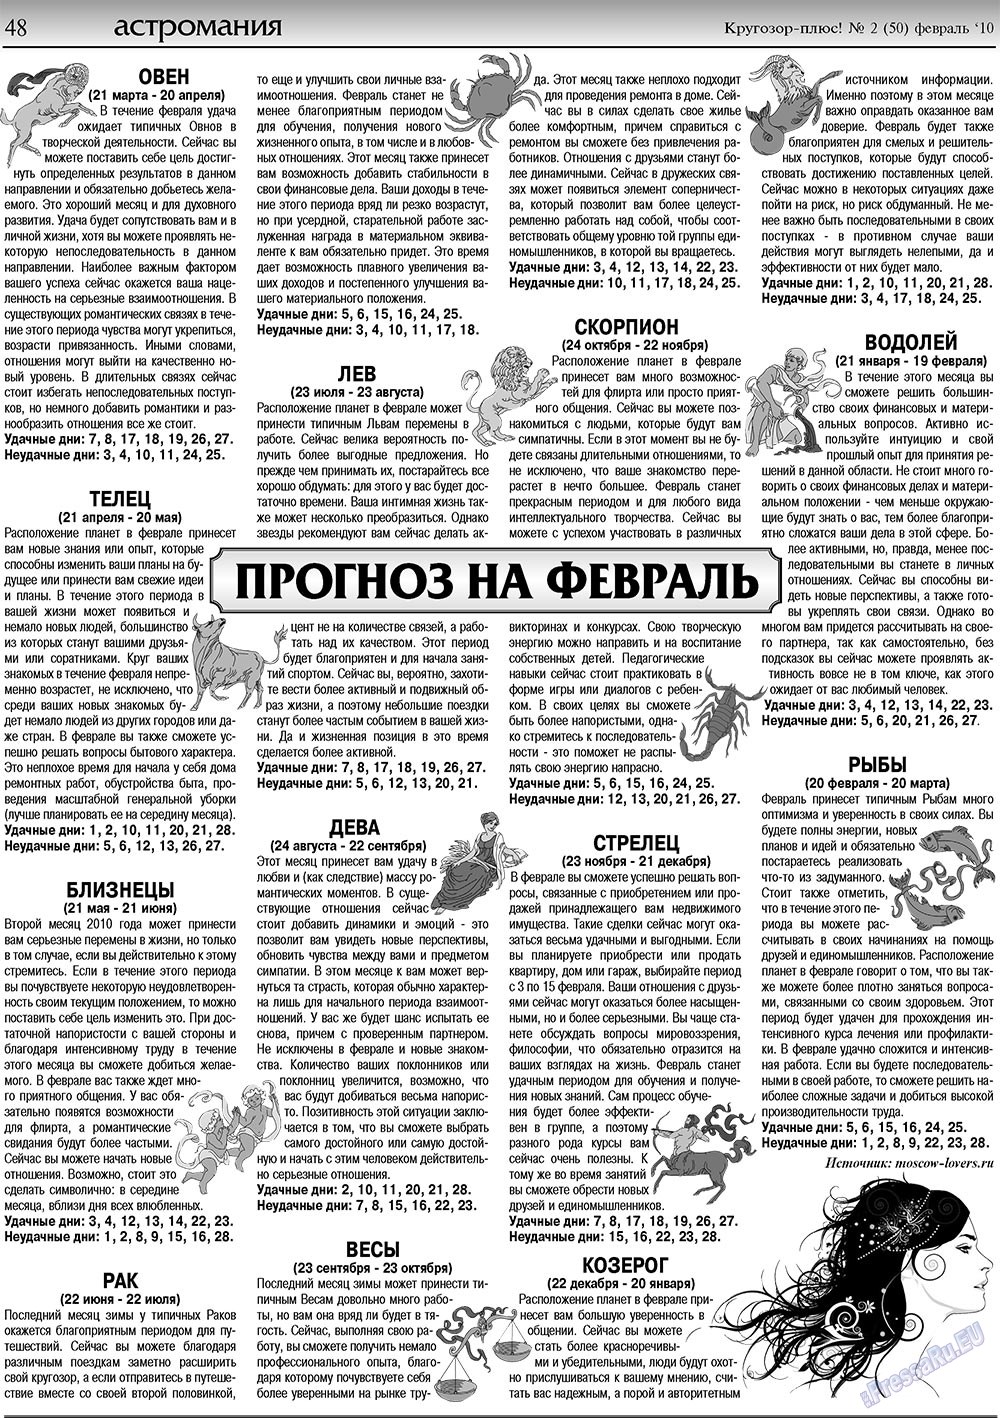 Кругозор плюс! (газета). 2010 год, номер 2, стр. 48